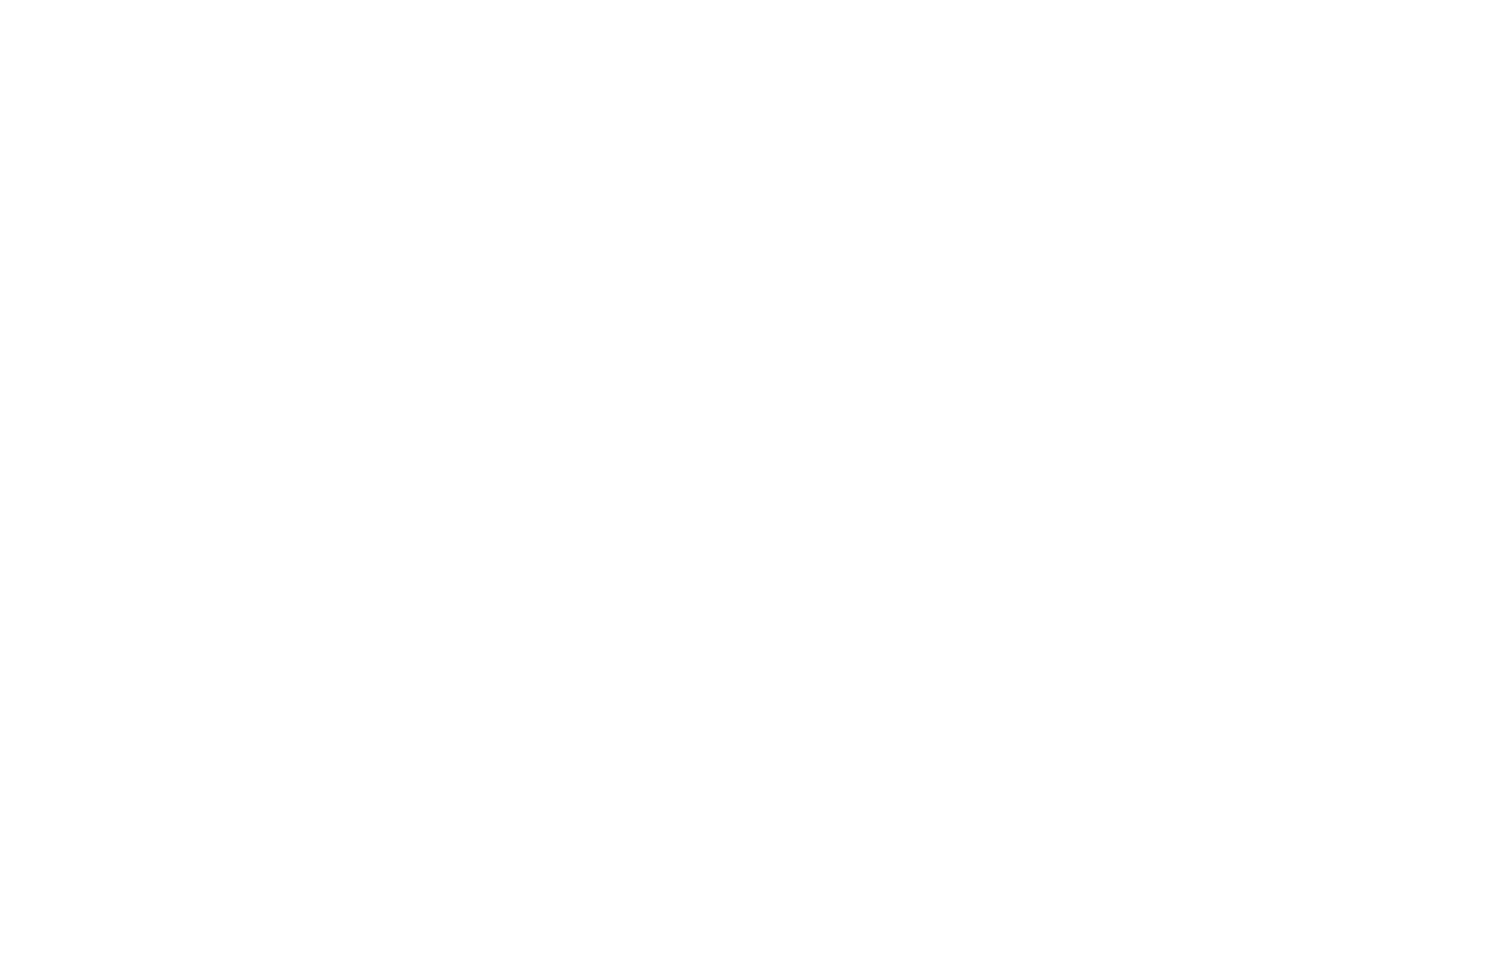 Sacred insights